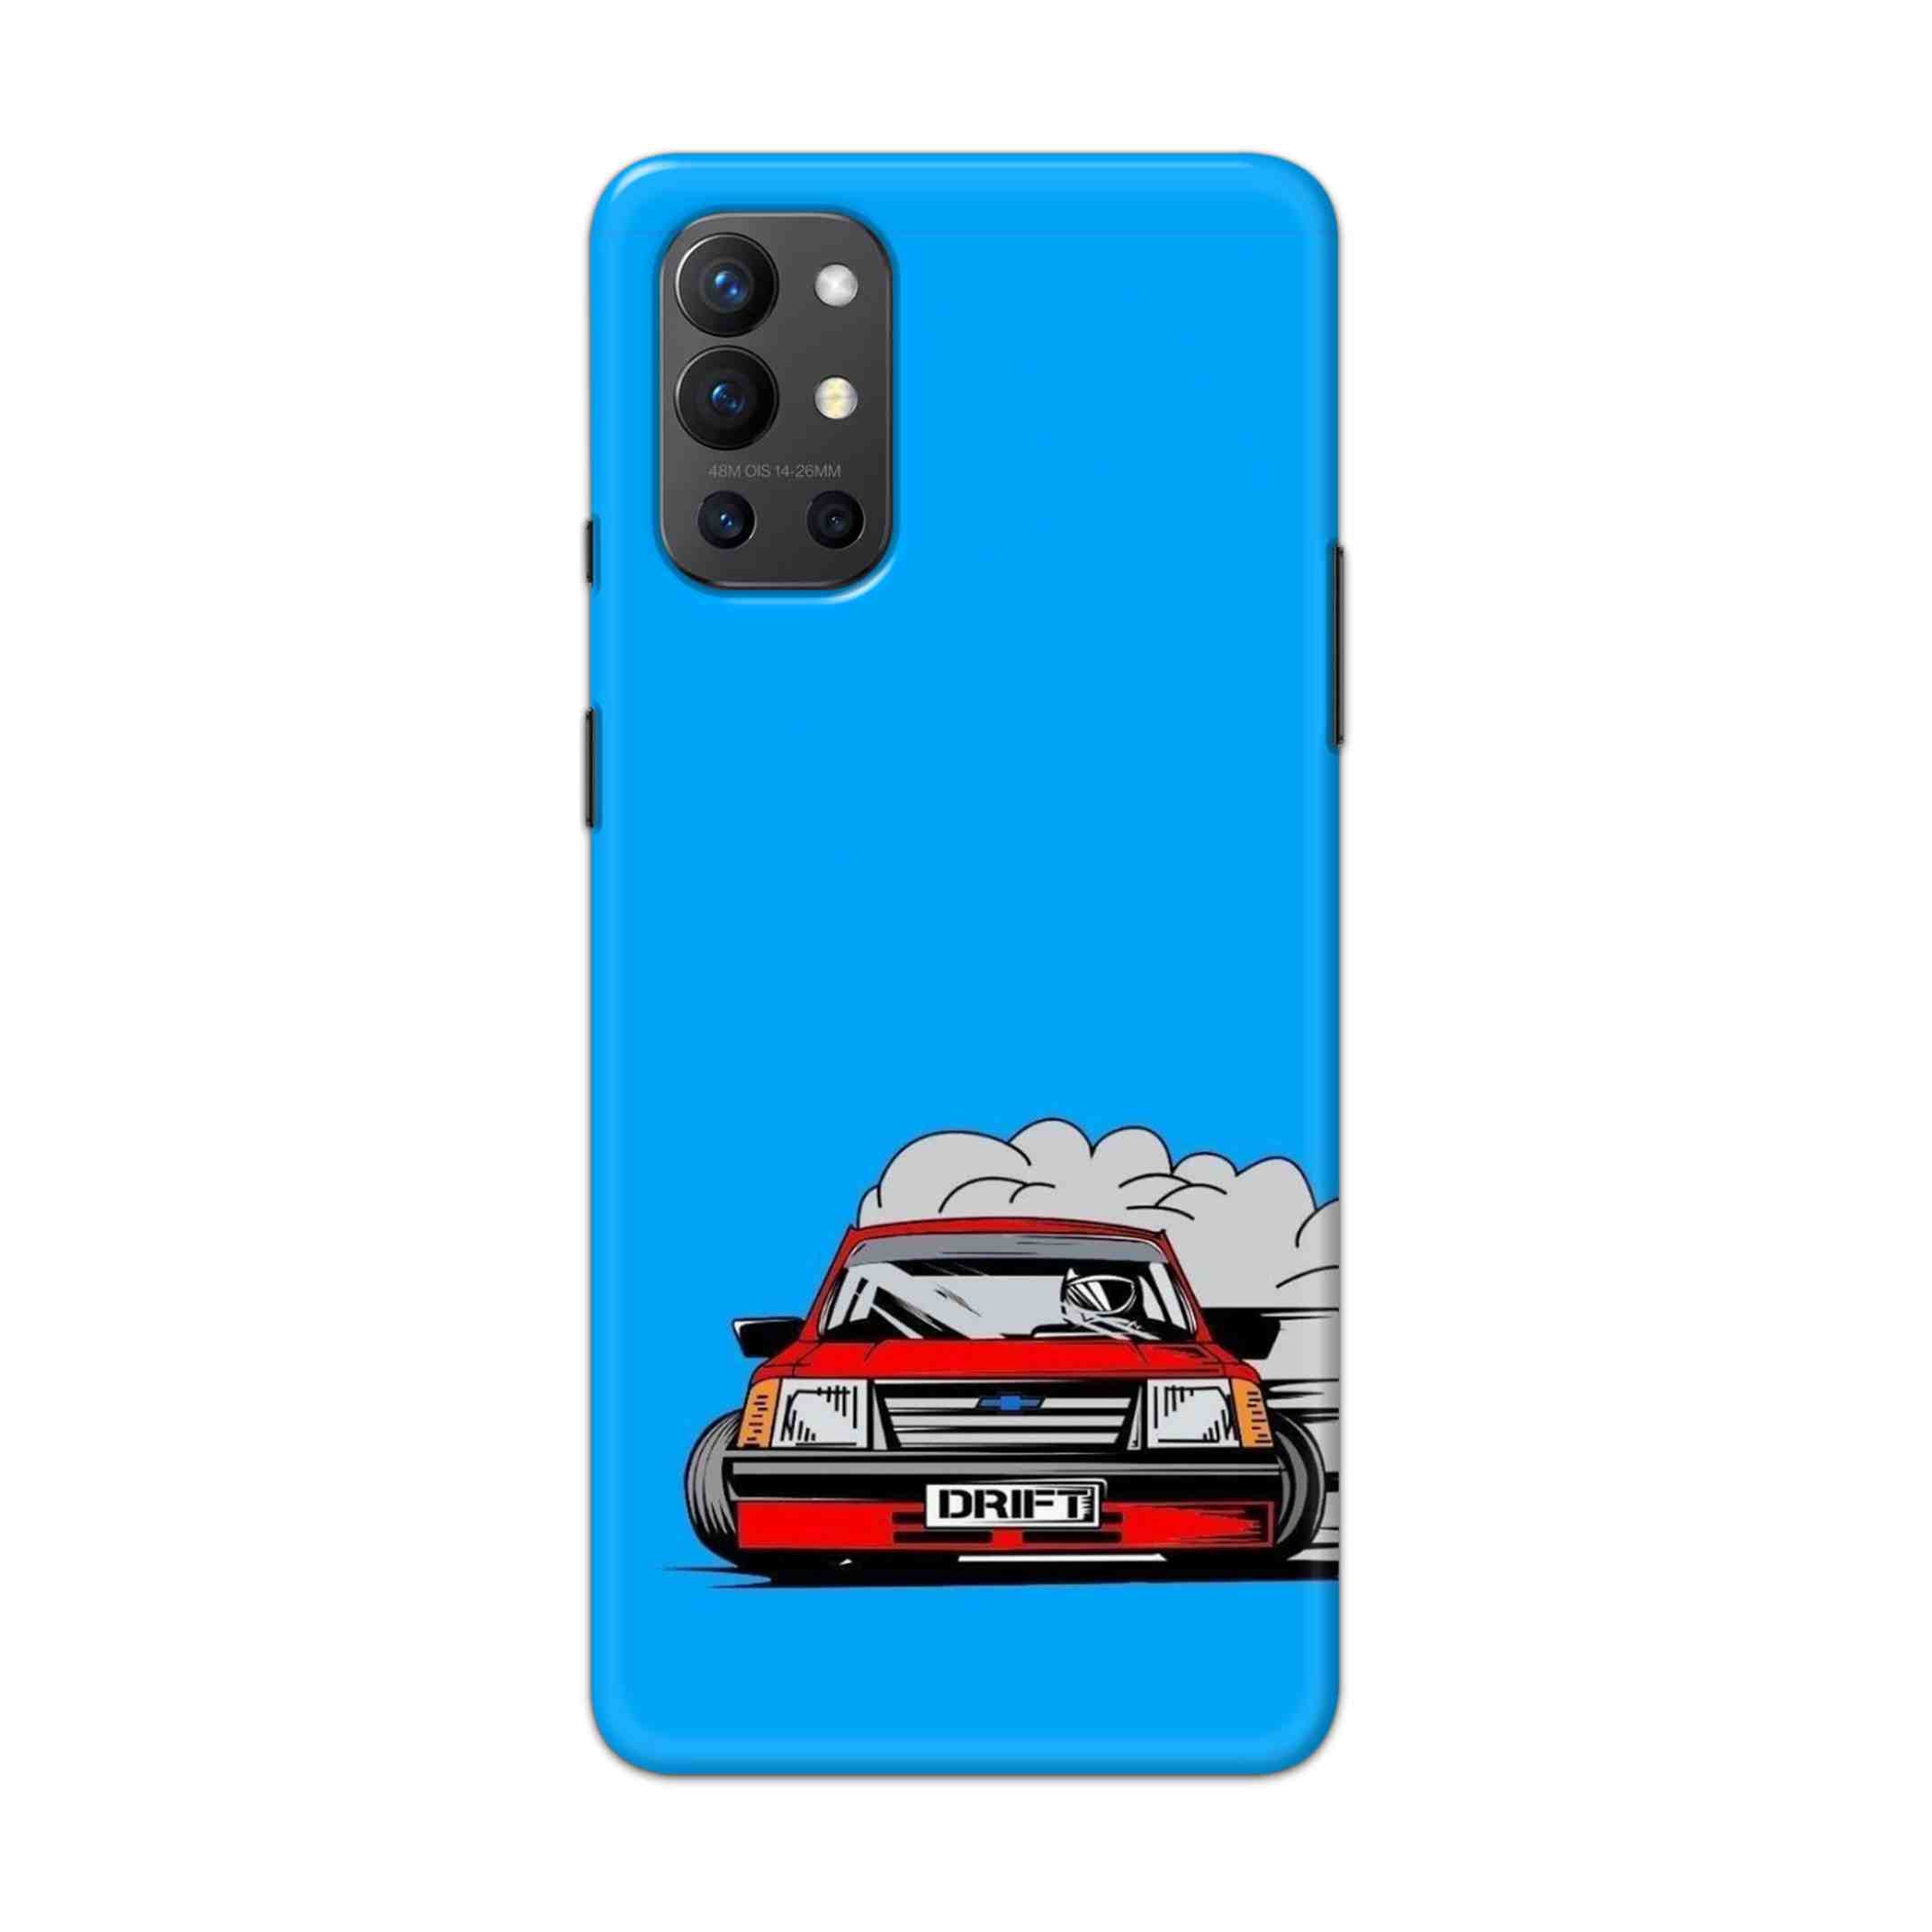 Buy Drift Hard Back Mobile Phone Case Cover For OnePlus 9R / 8T Online